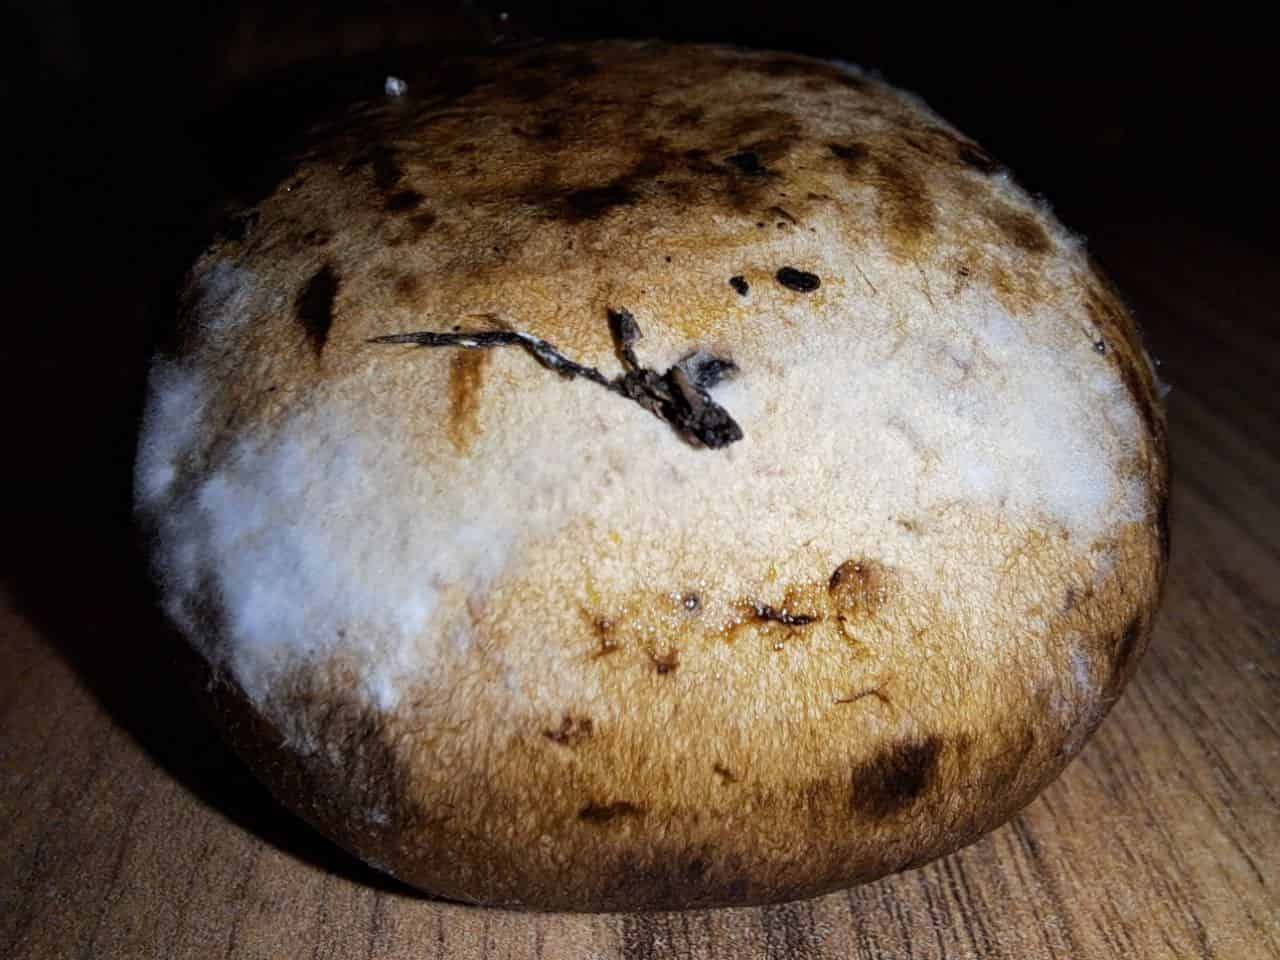 Slimey moldy mushroom with white fuzz on it